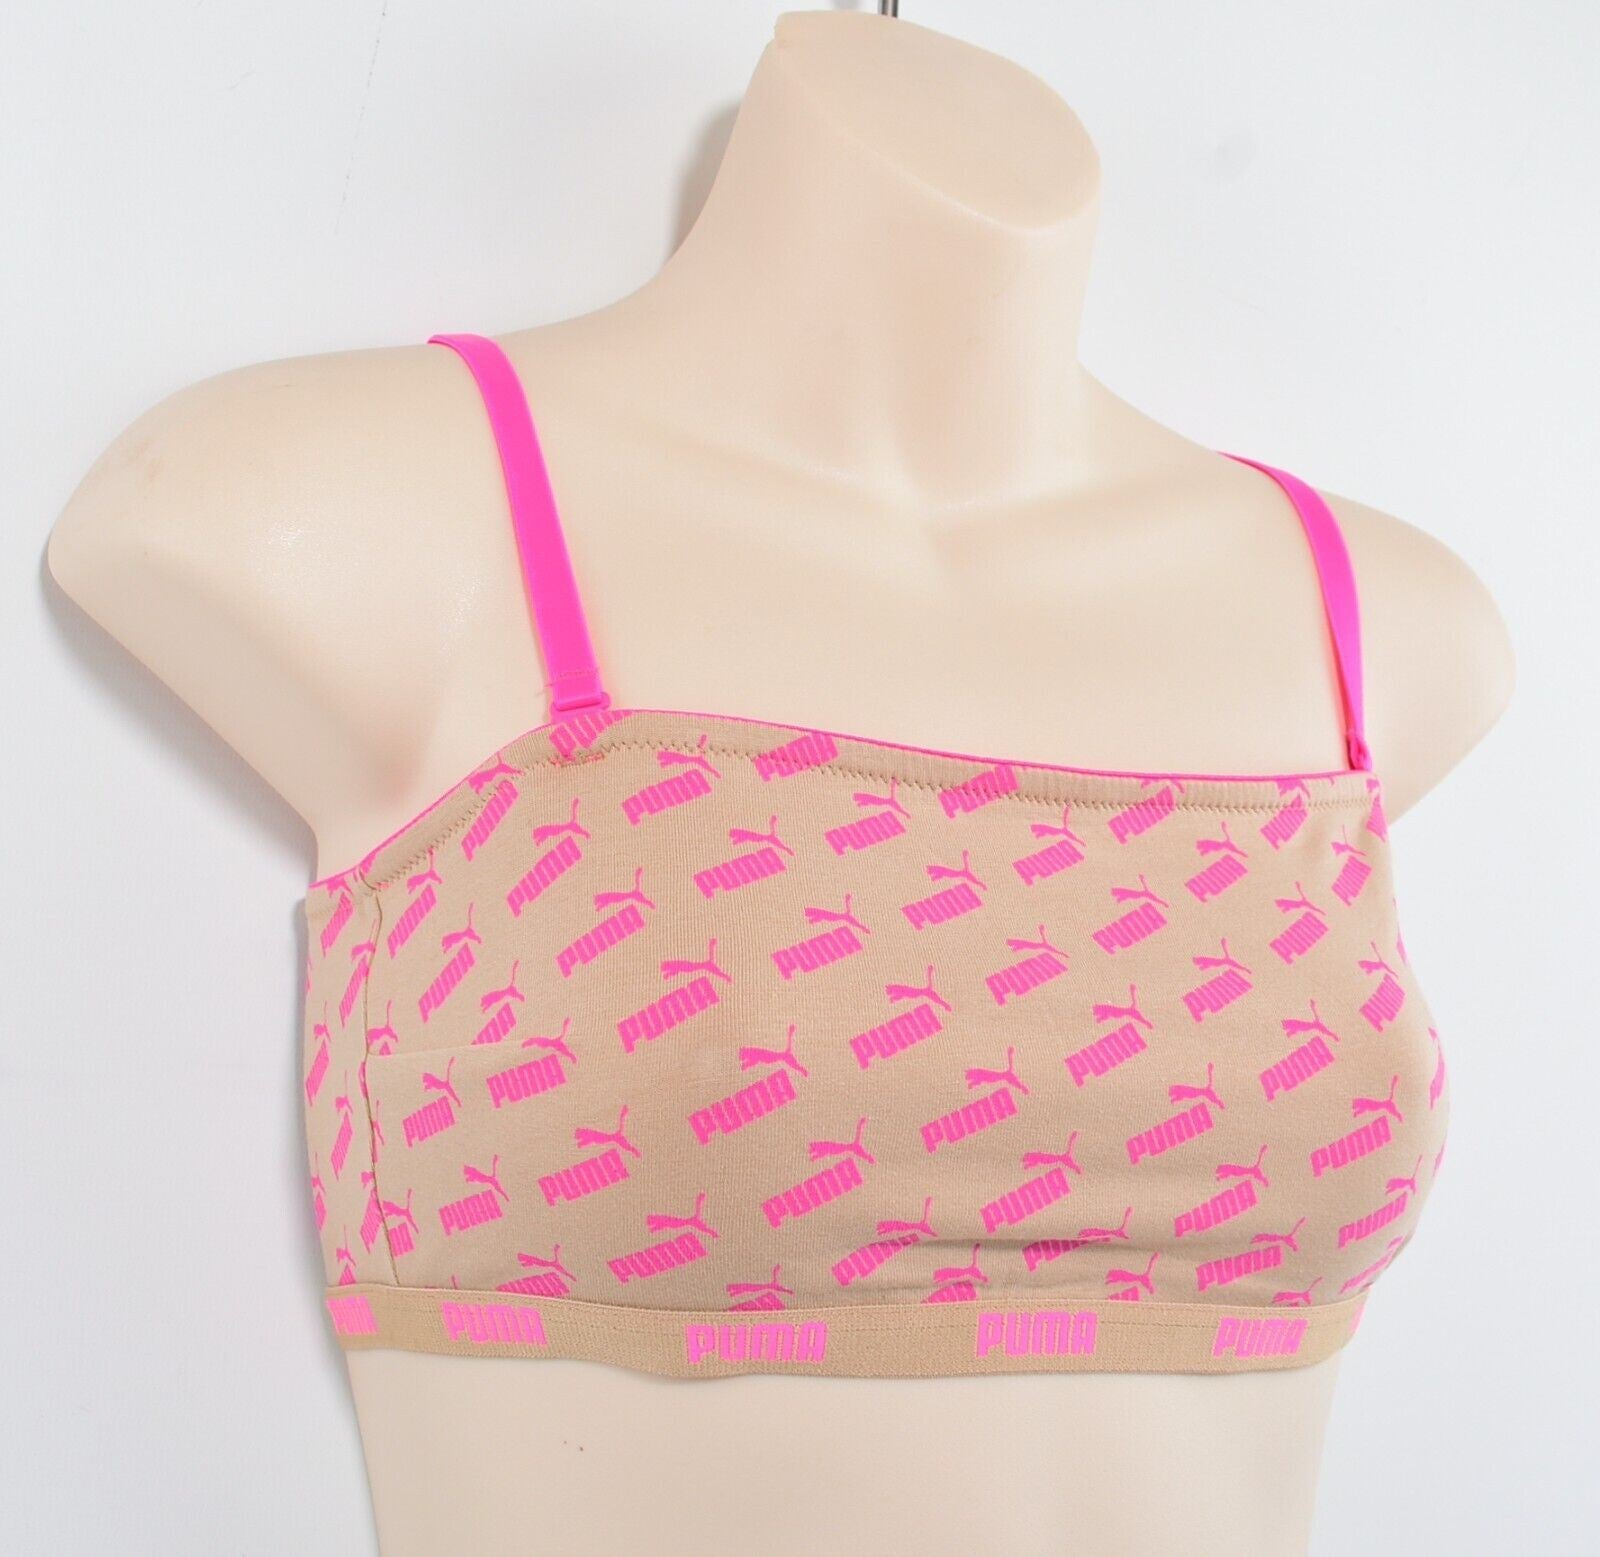 PUMA Women's Cotton Stretch BANDEAU TOP, Logo Print, Nude/Pink, size M